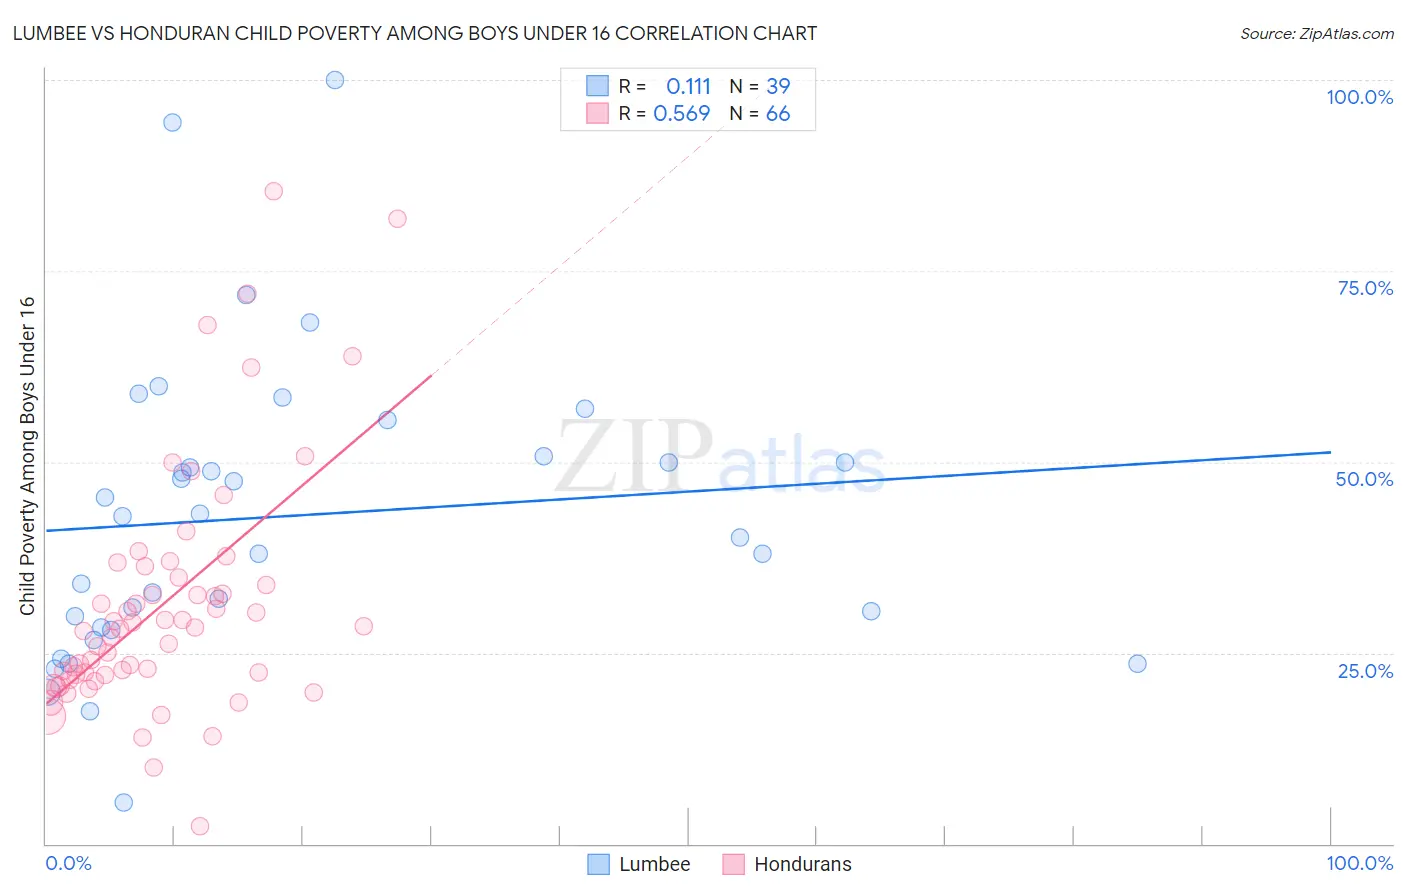 Lumbee vs Honduran Child Poverty Among Boys Under 16